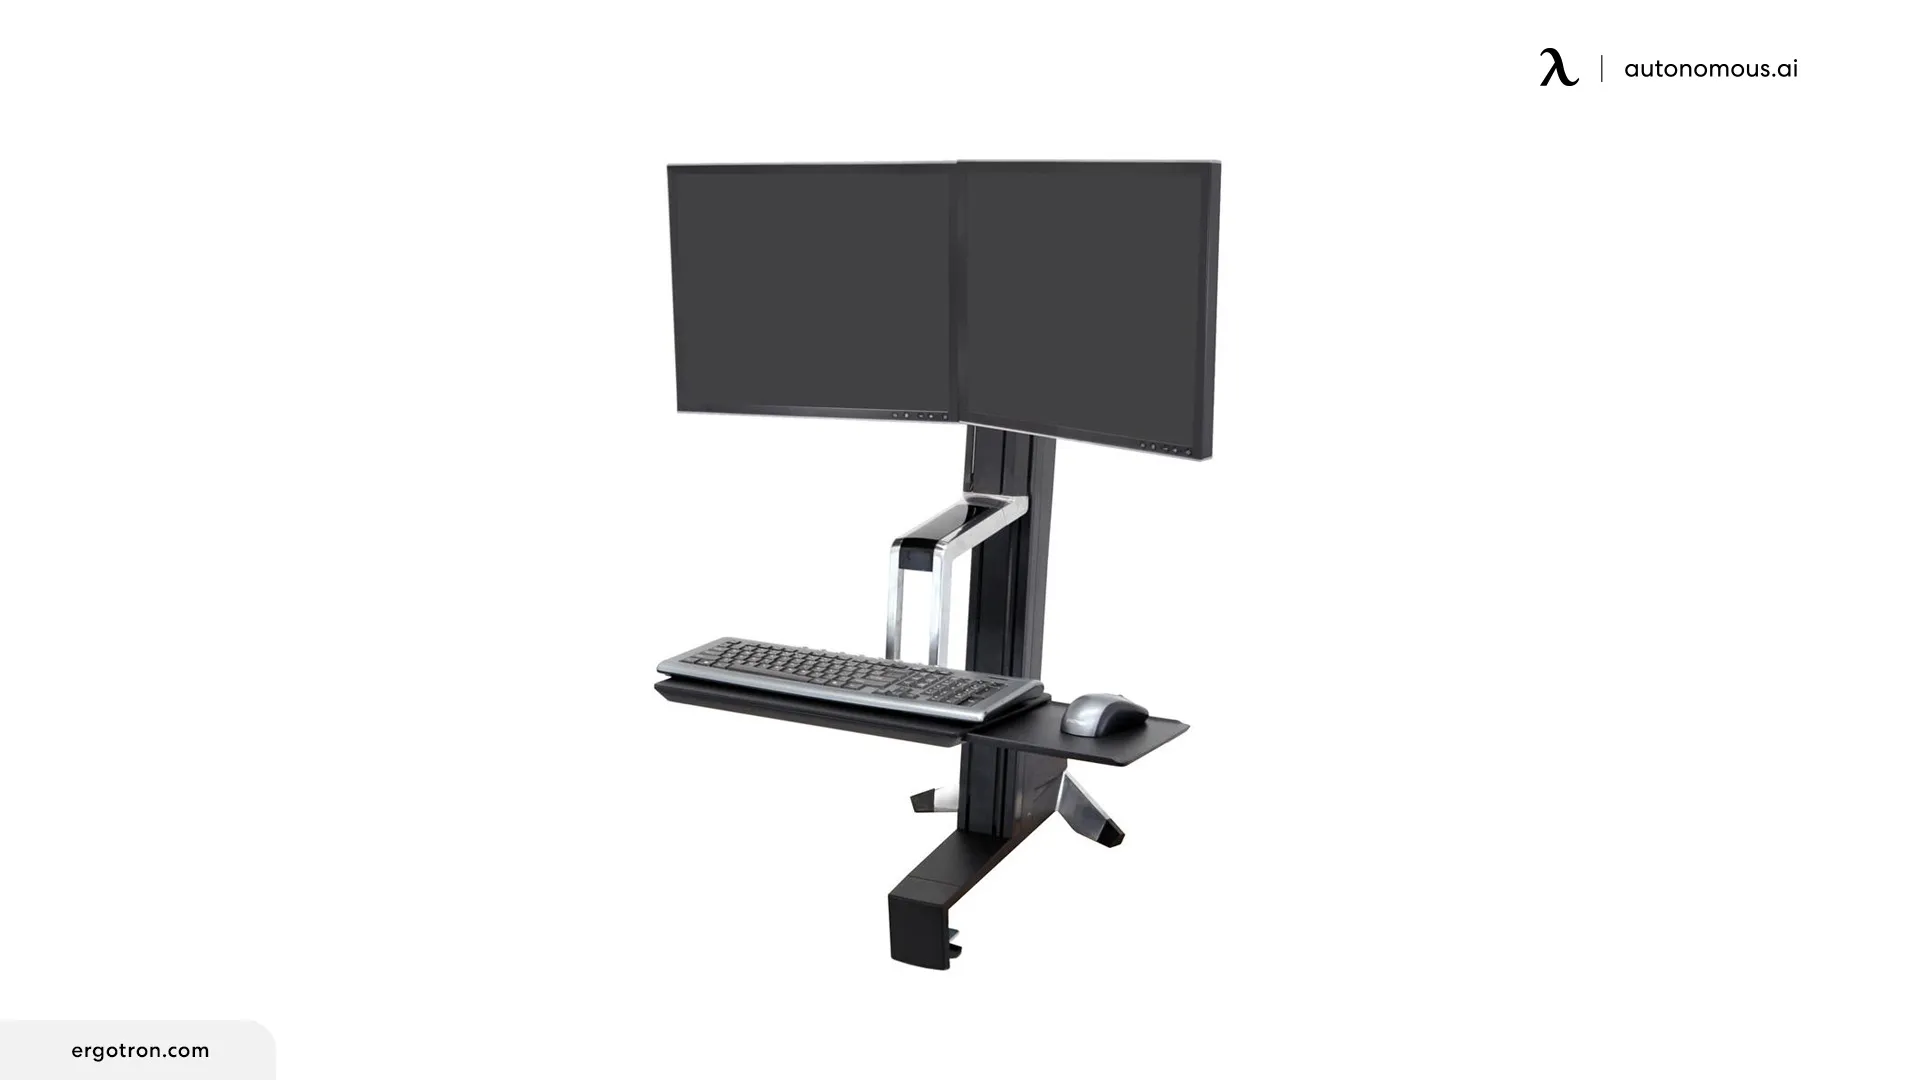 WorkFit-S Dual Monitor Standing Desk Workstation